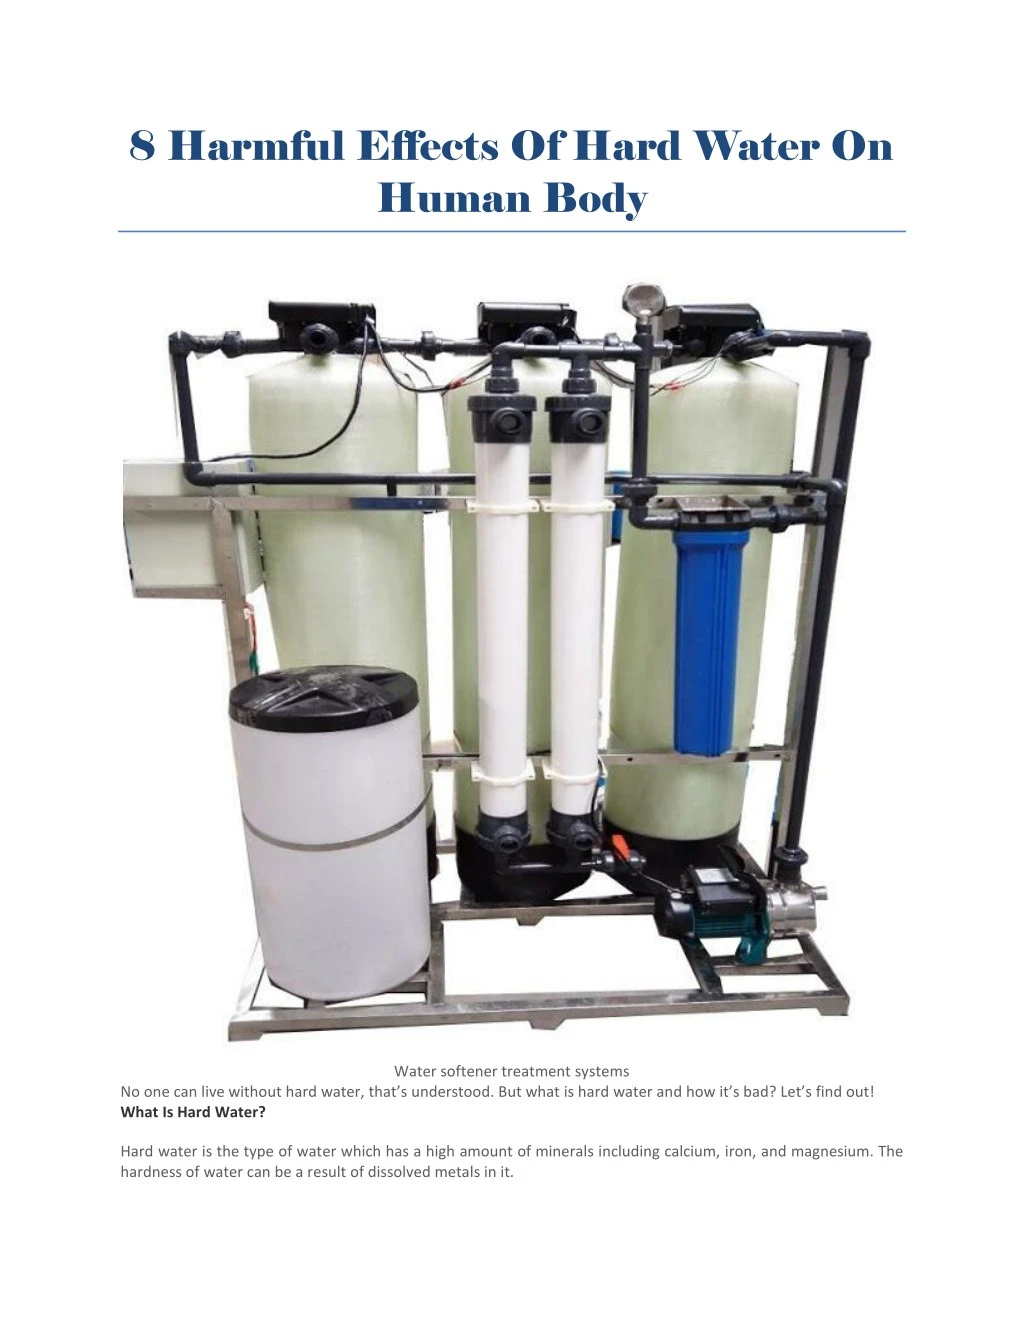 8 harmful effects of hard water on human body